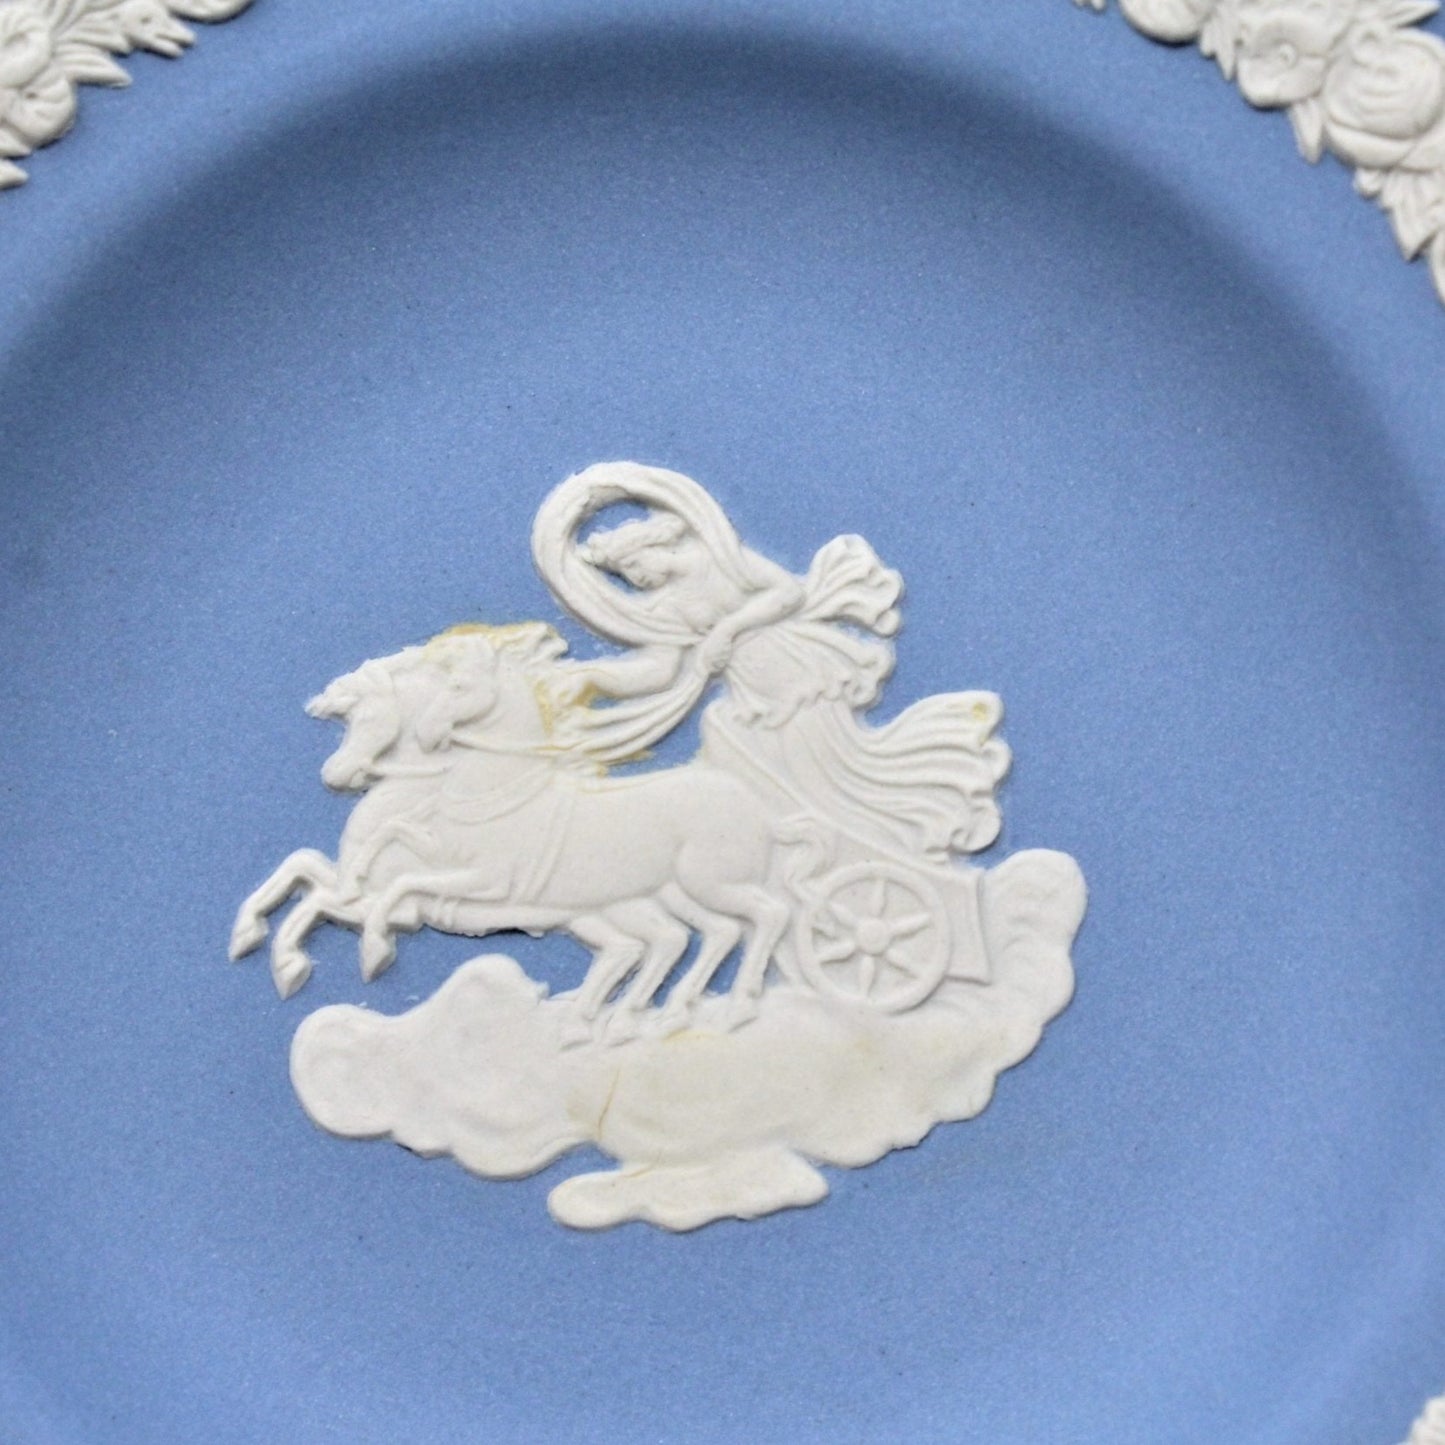 Decorative Plate, Blue Jasperware Aurora, Wedgwood, Vintage